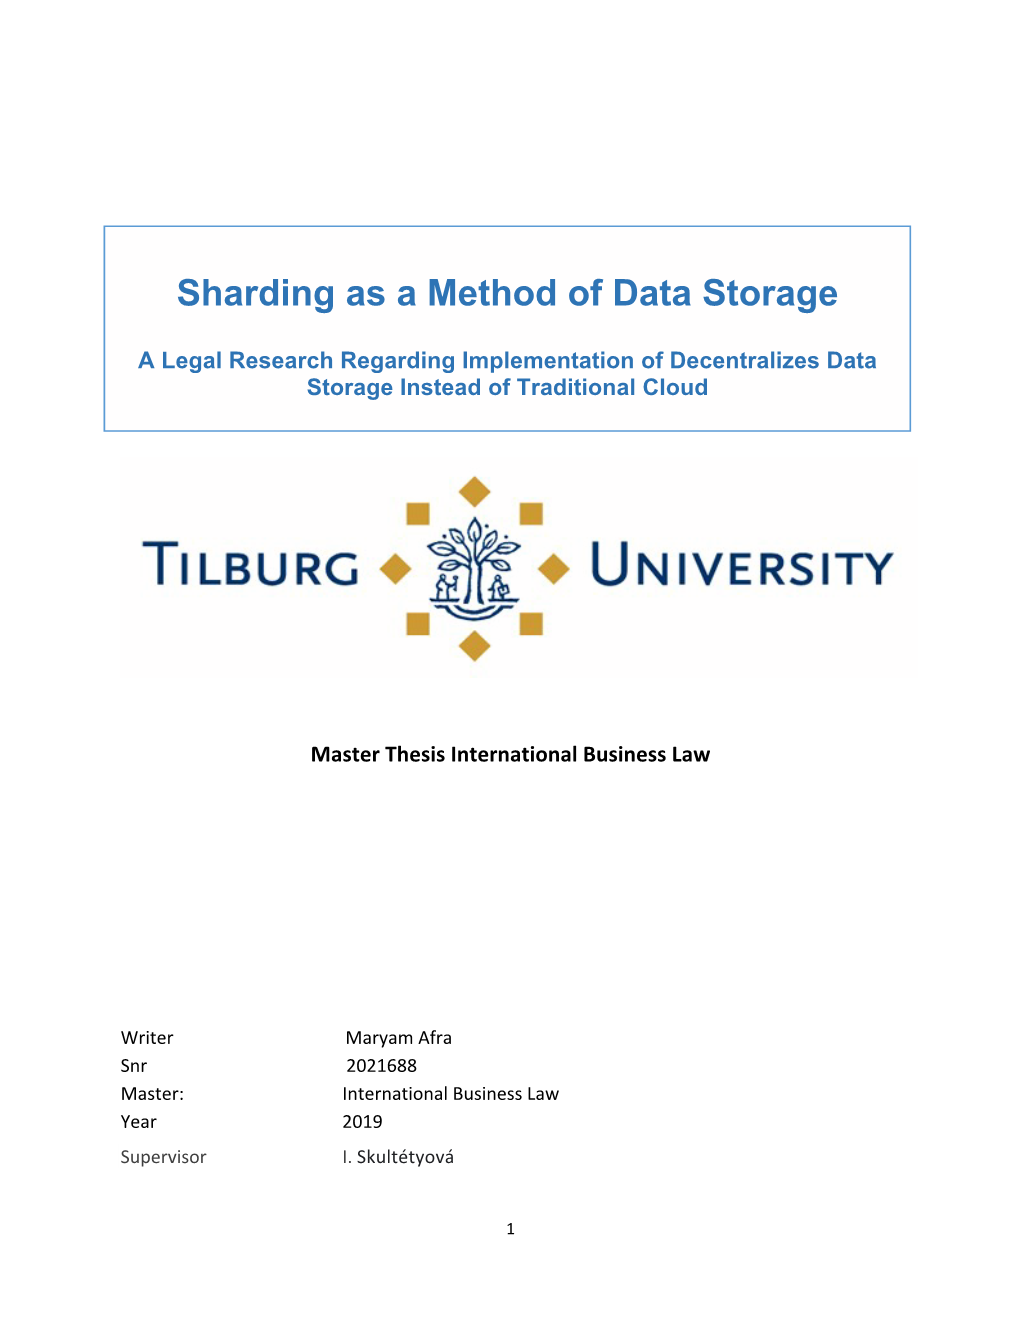 Sharding As a Method of Data Storage